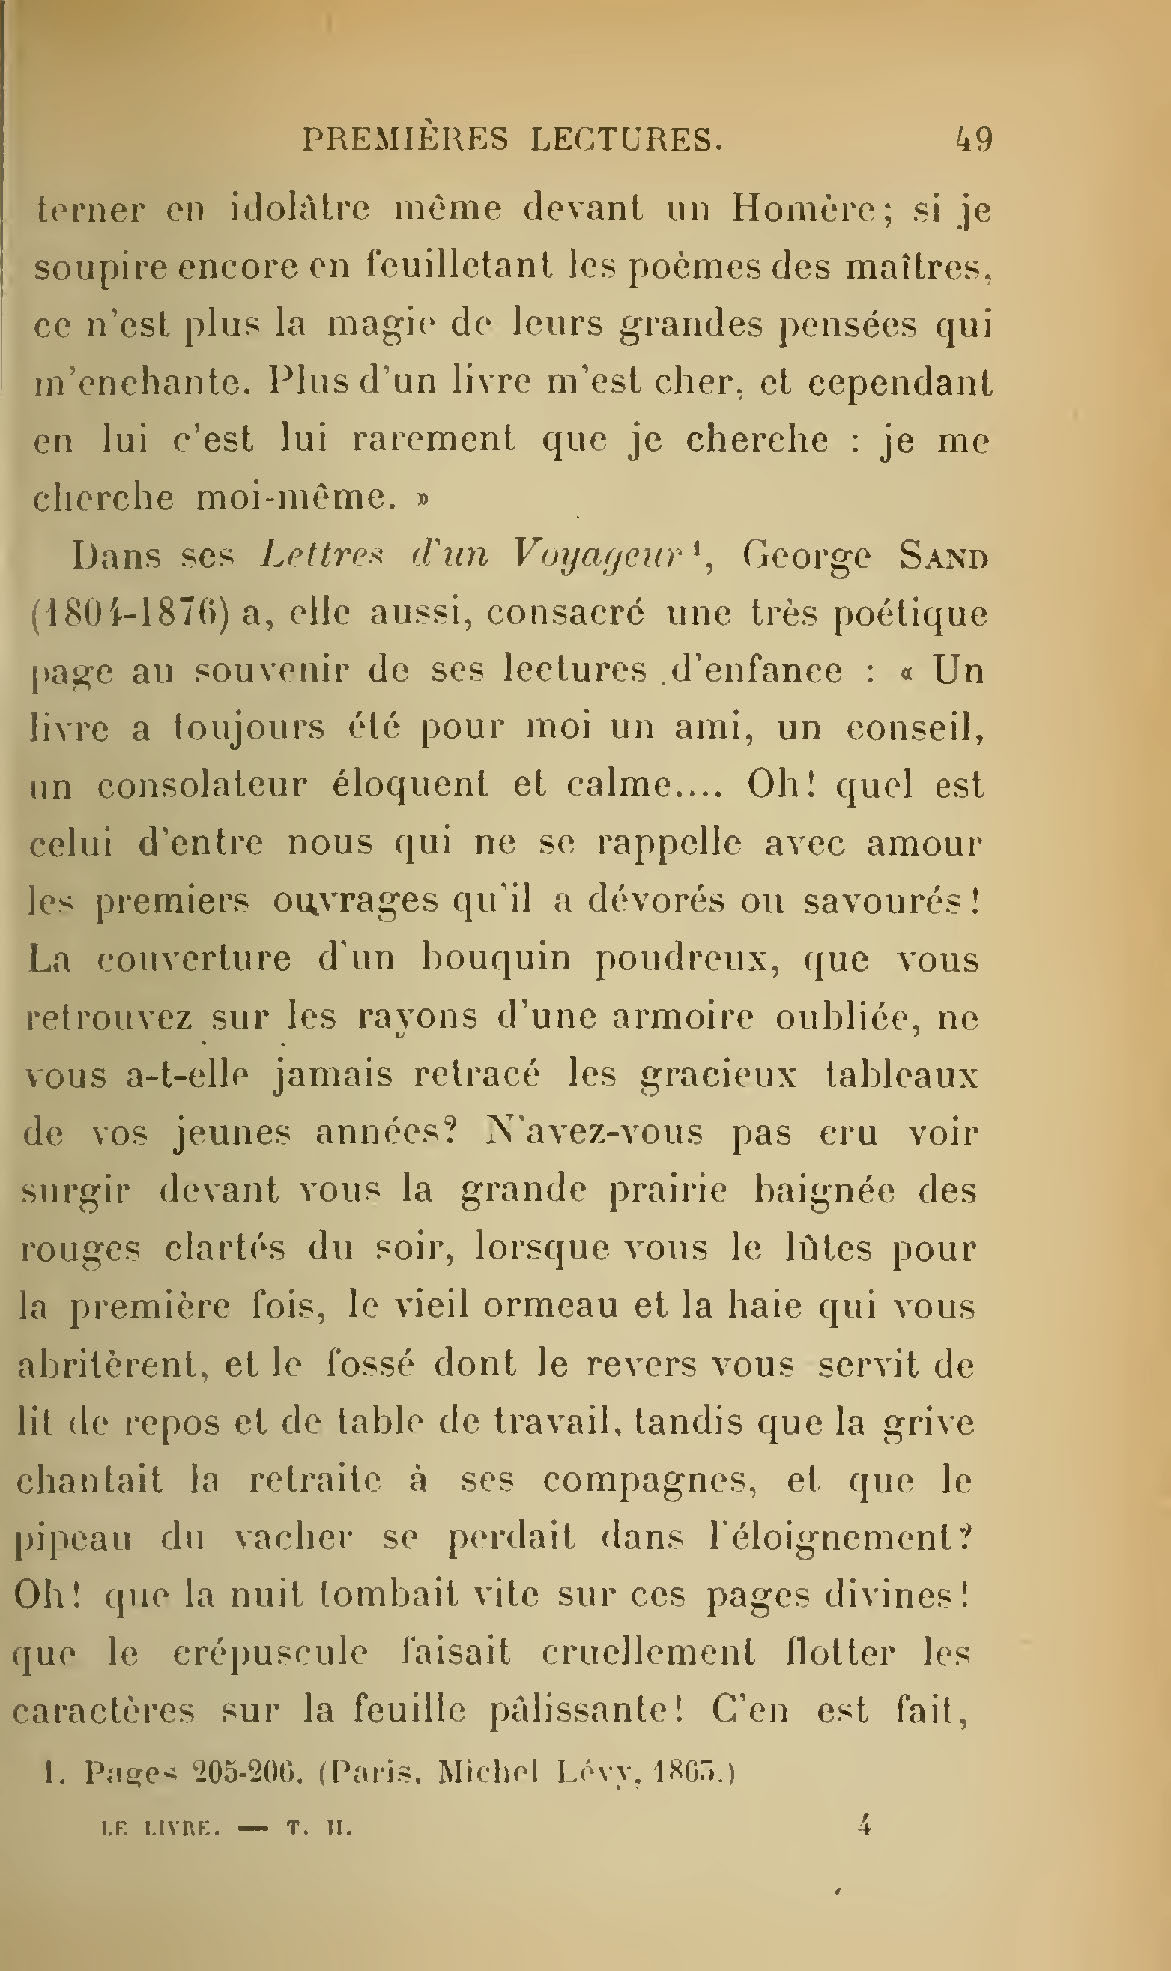 Albert Cim, Le Livre, t. II, p. 049.